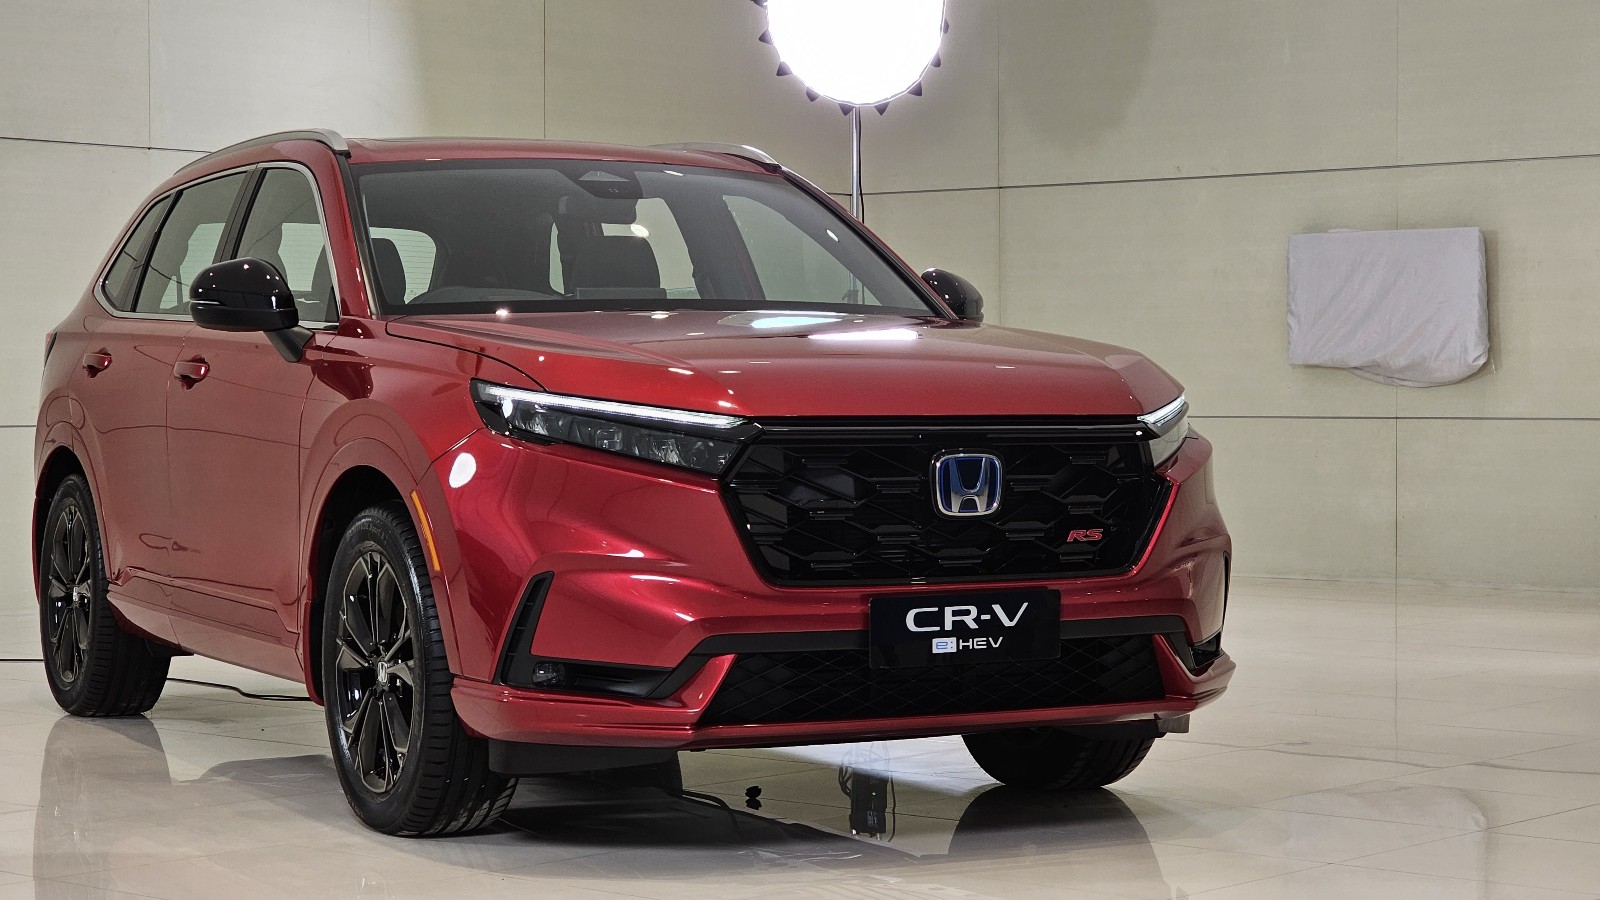 Sambut Era Elektrifikasi di Indonesia, Honda Luncurkan CR-V Hybrid